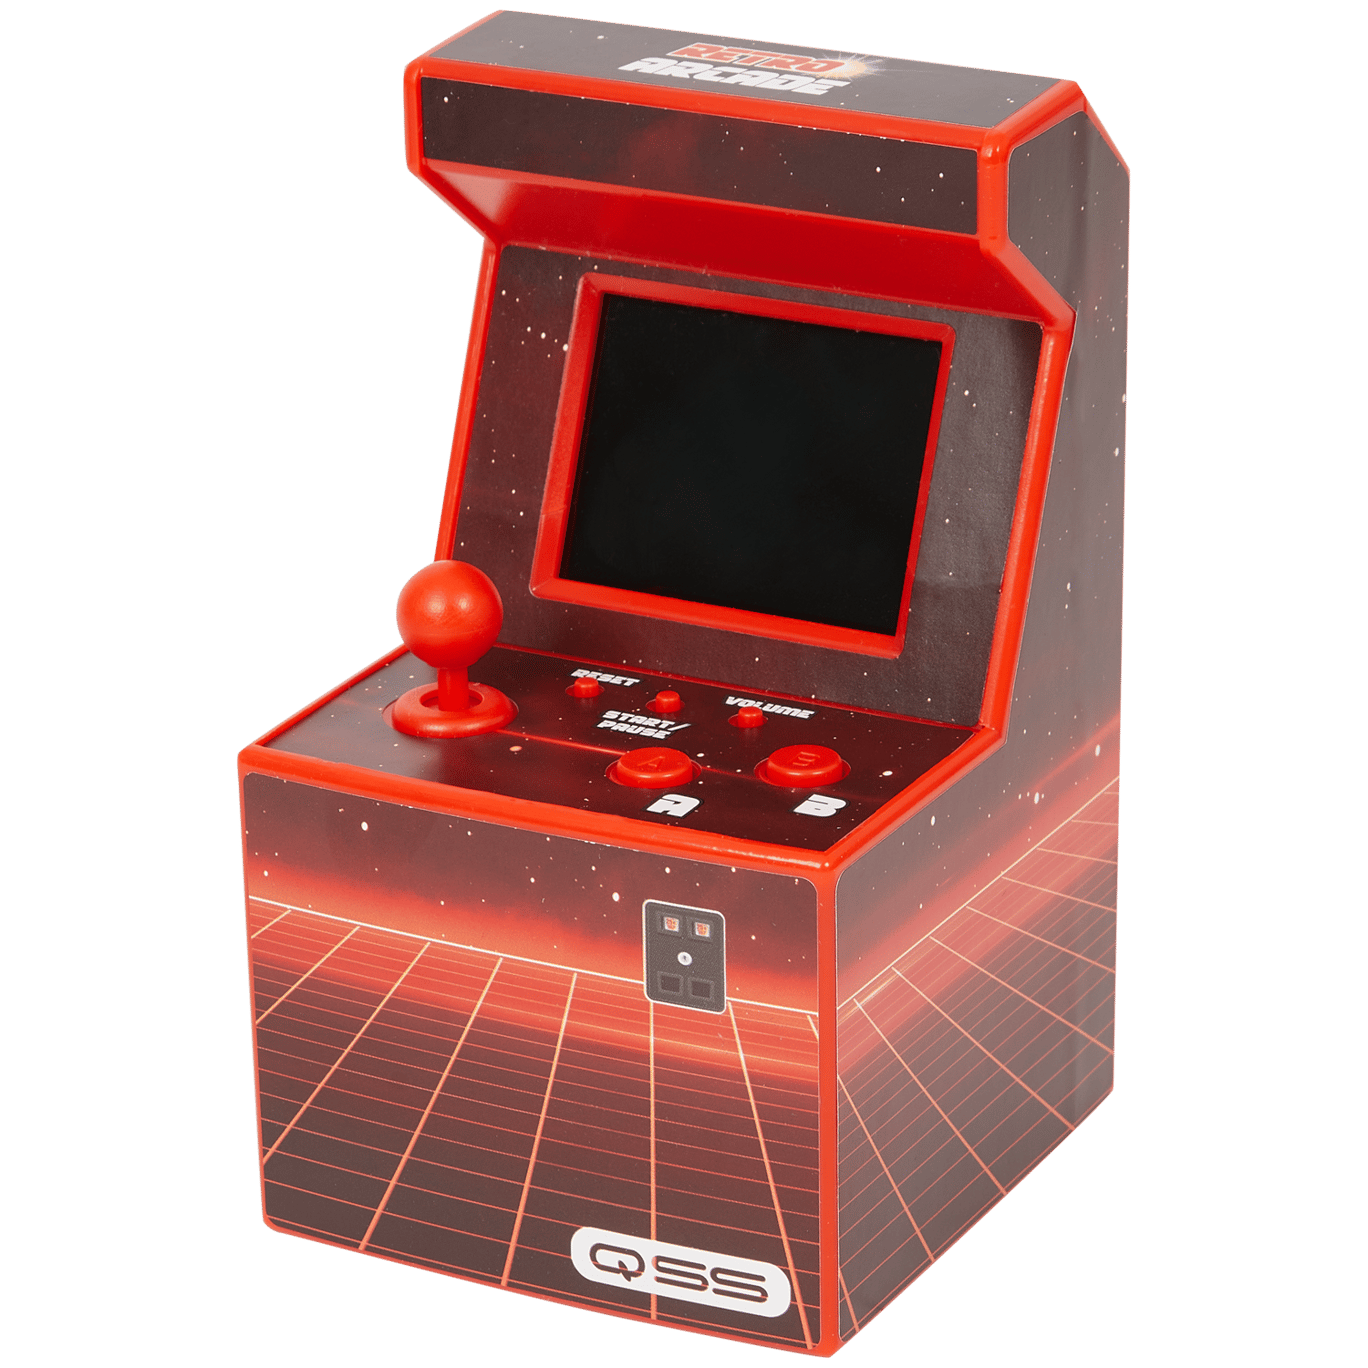 Mini-borne d’arcade rétro QSS